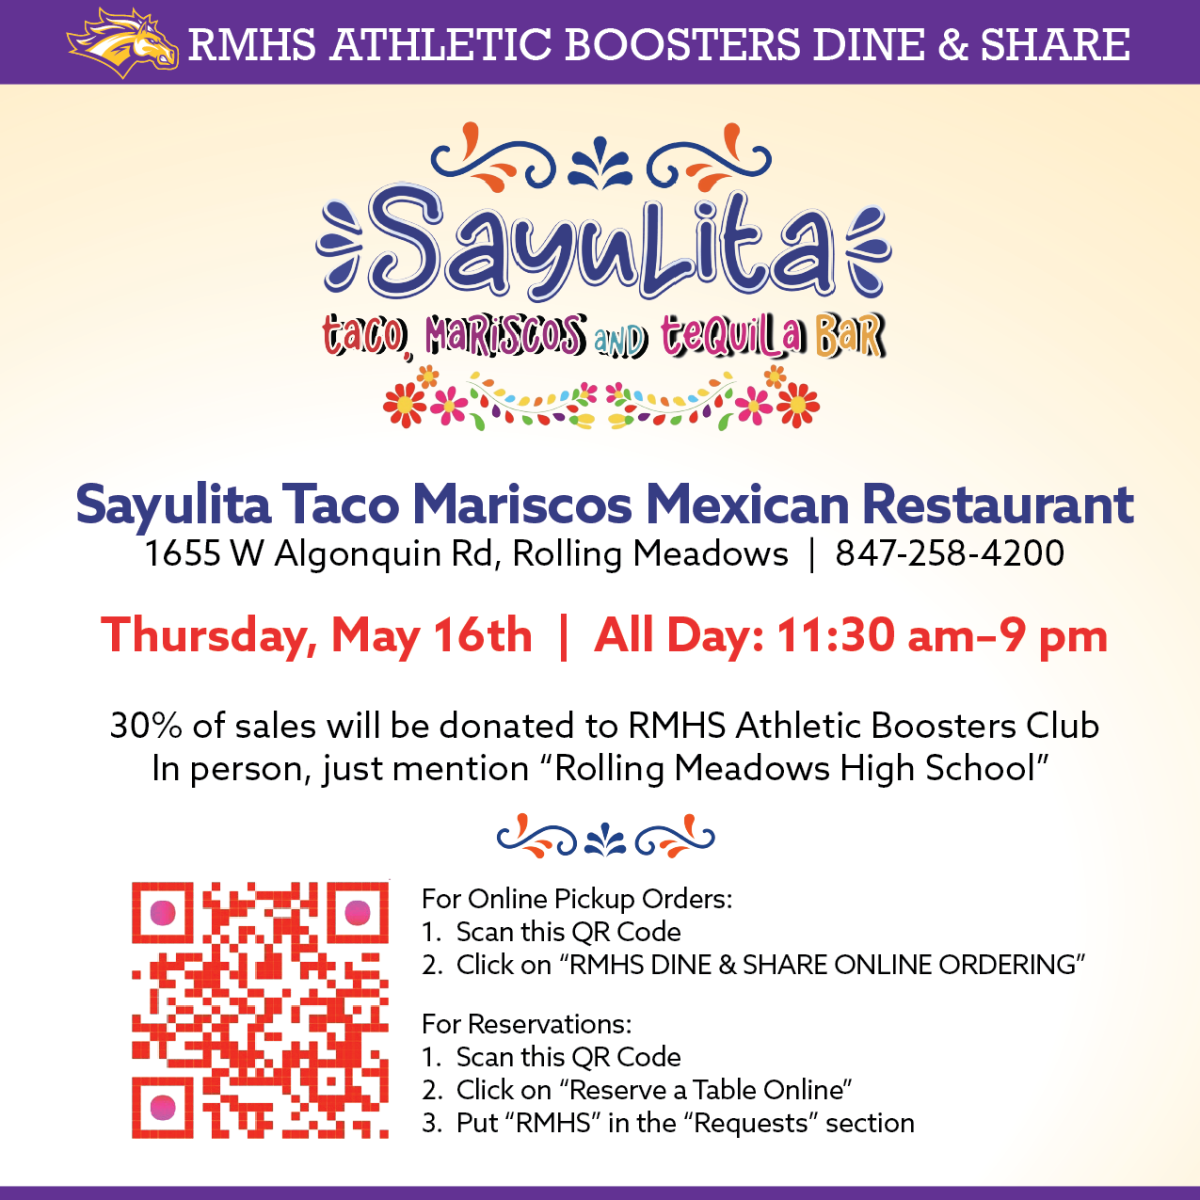 Dine & Share: Thursday, May 16th @ Sayulita!